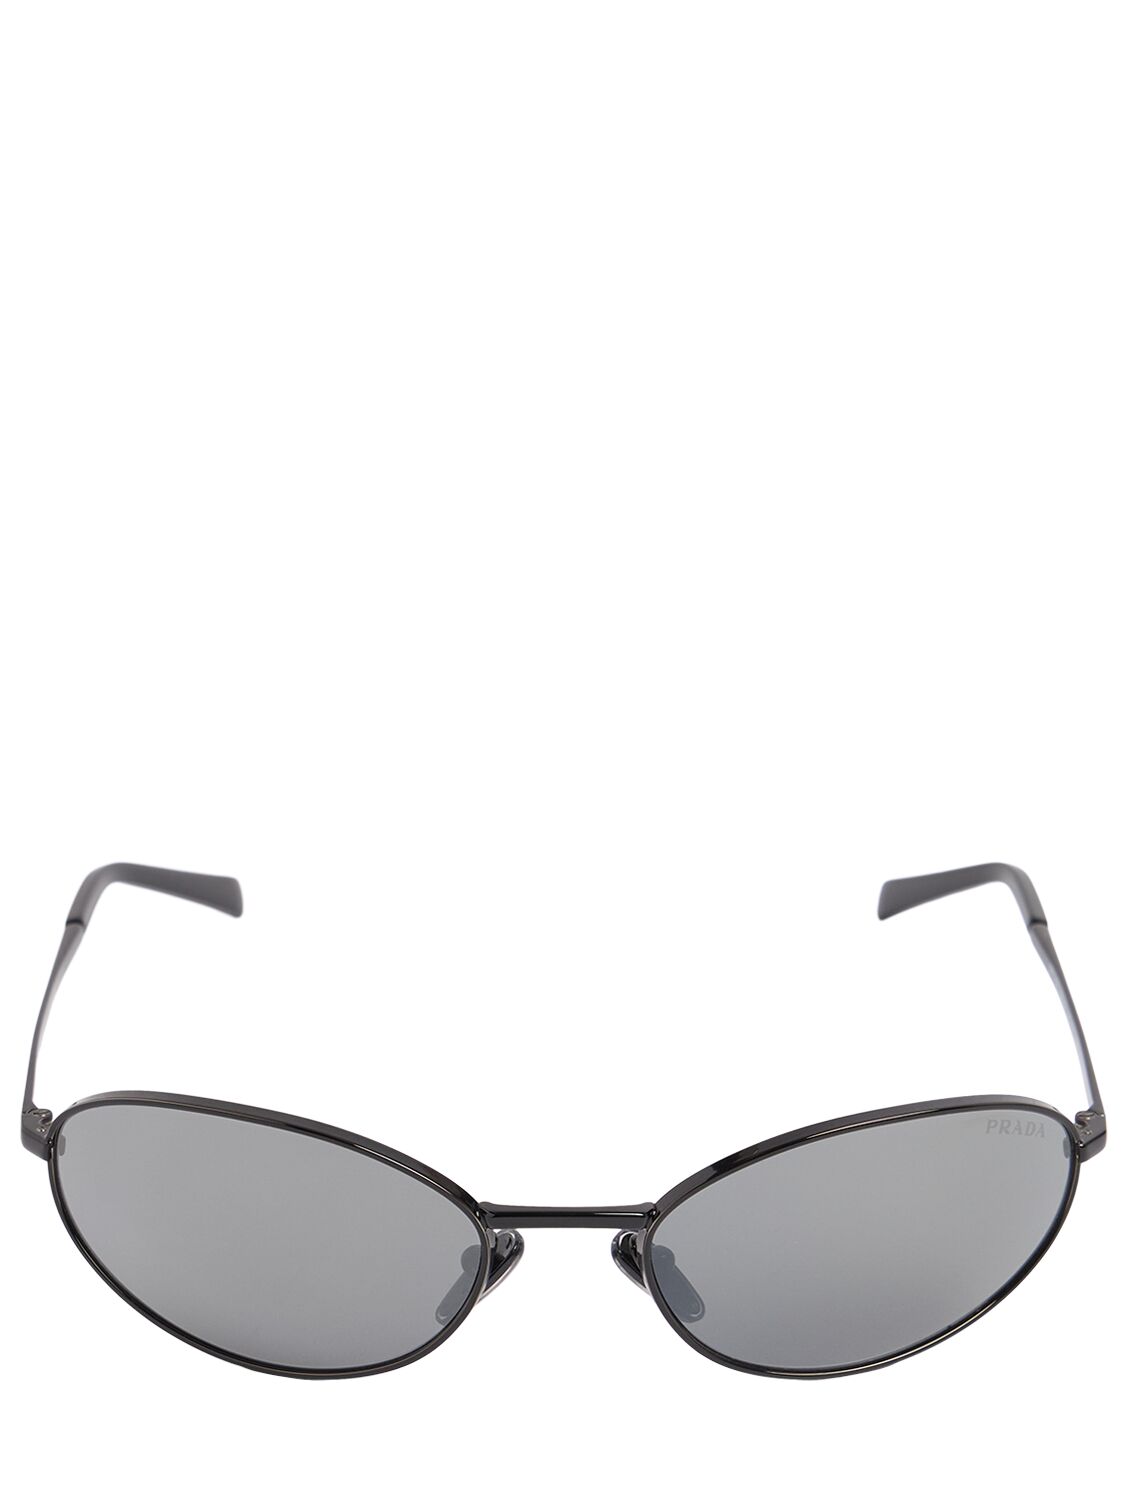 Prada Round Metal Sunglasses In Black